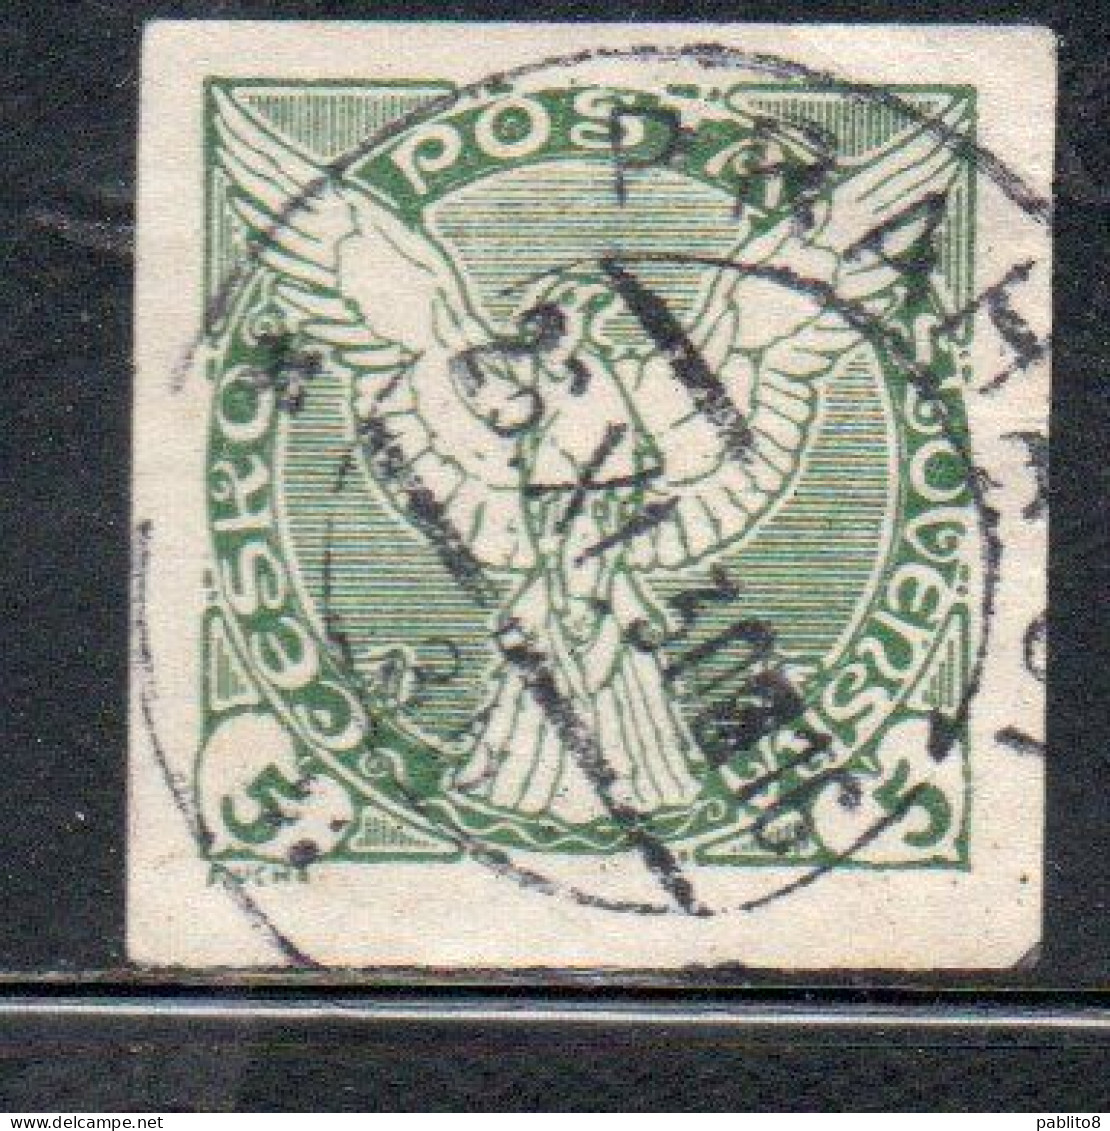 CZECHOSLOVAKIA CESKA CECOSLOVACCHIA 1918 1920 IMPERF. NEWSPAPER STAMPS WINDHOVER 5h USED USATO OBLITERE' - Newspaper Stamps